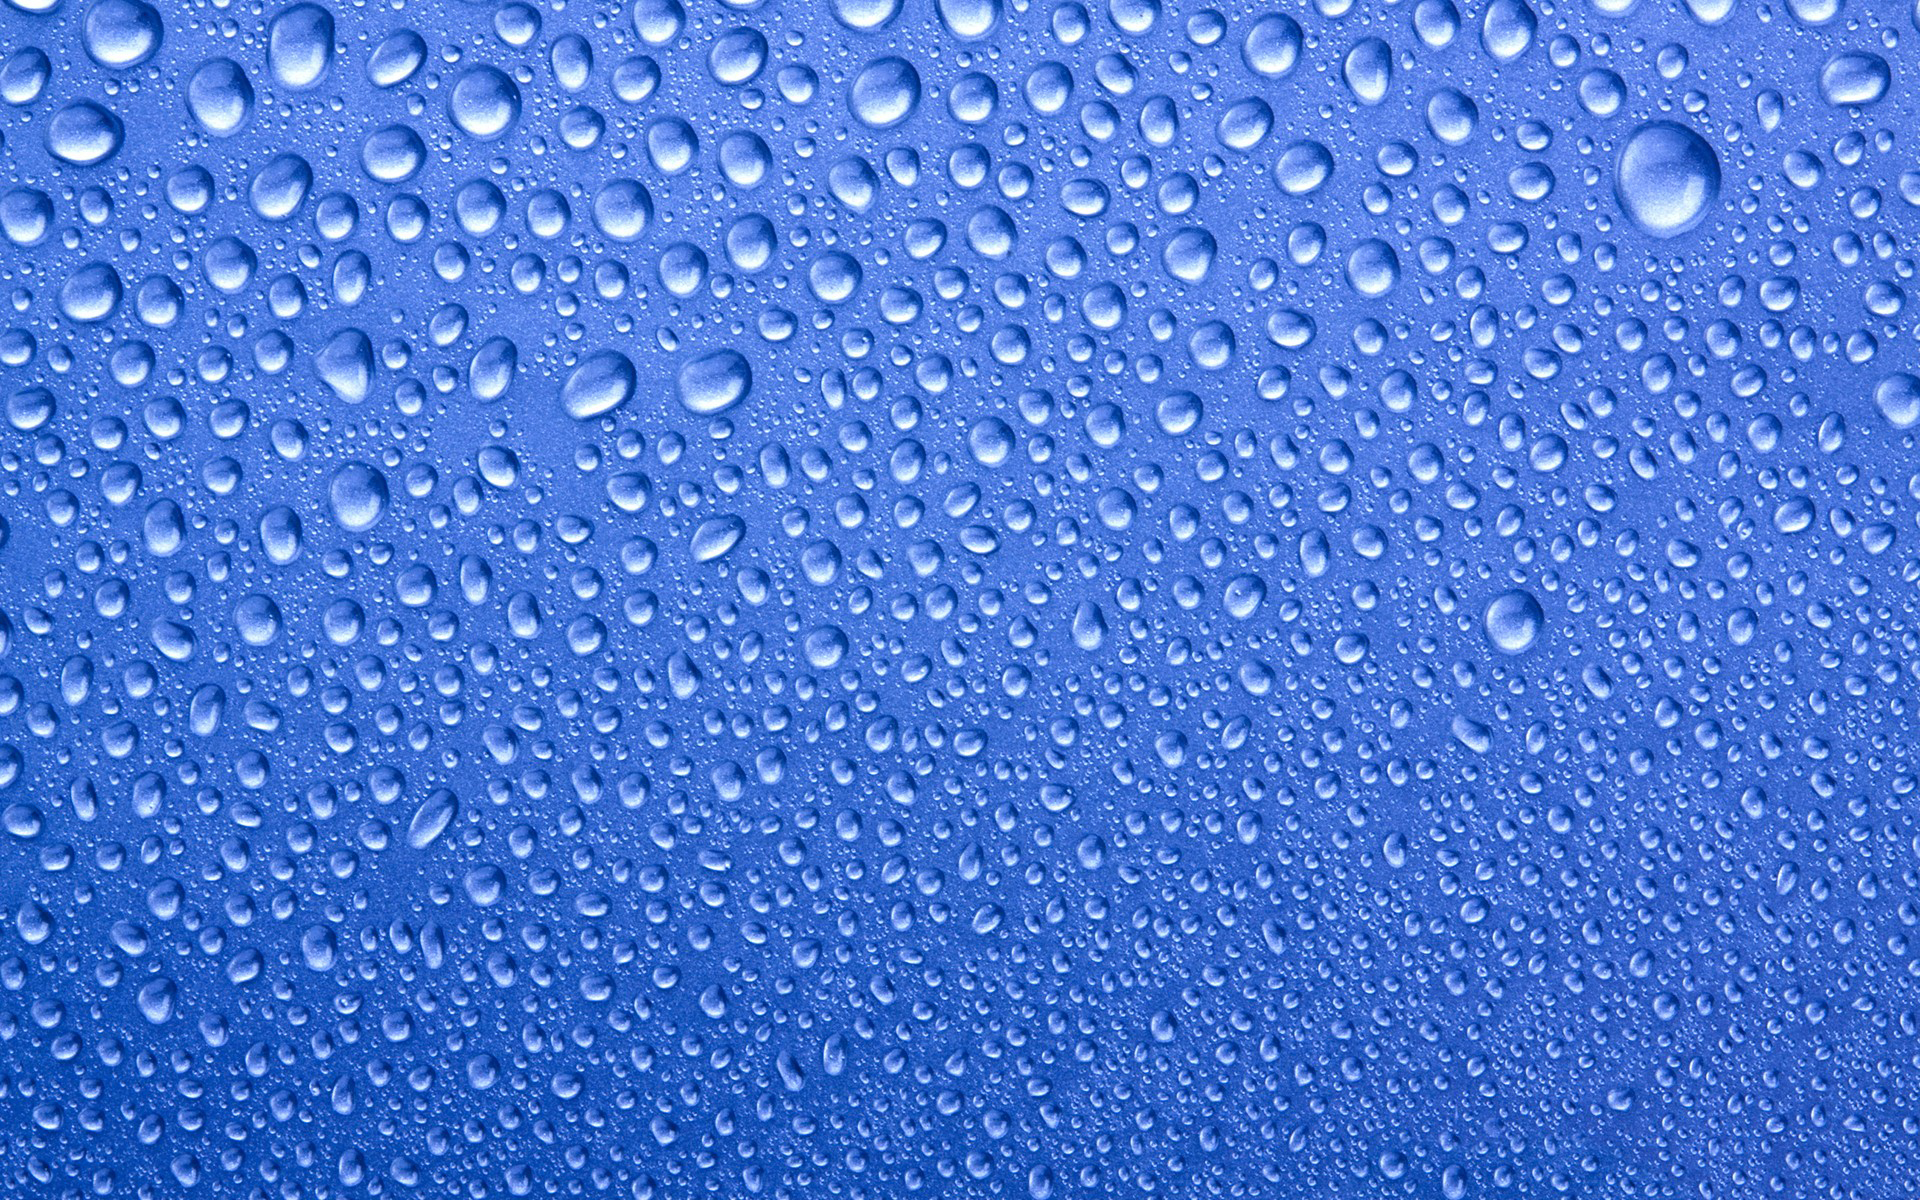 ... blue-water-drops